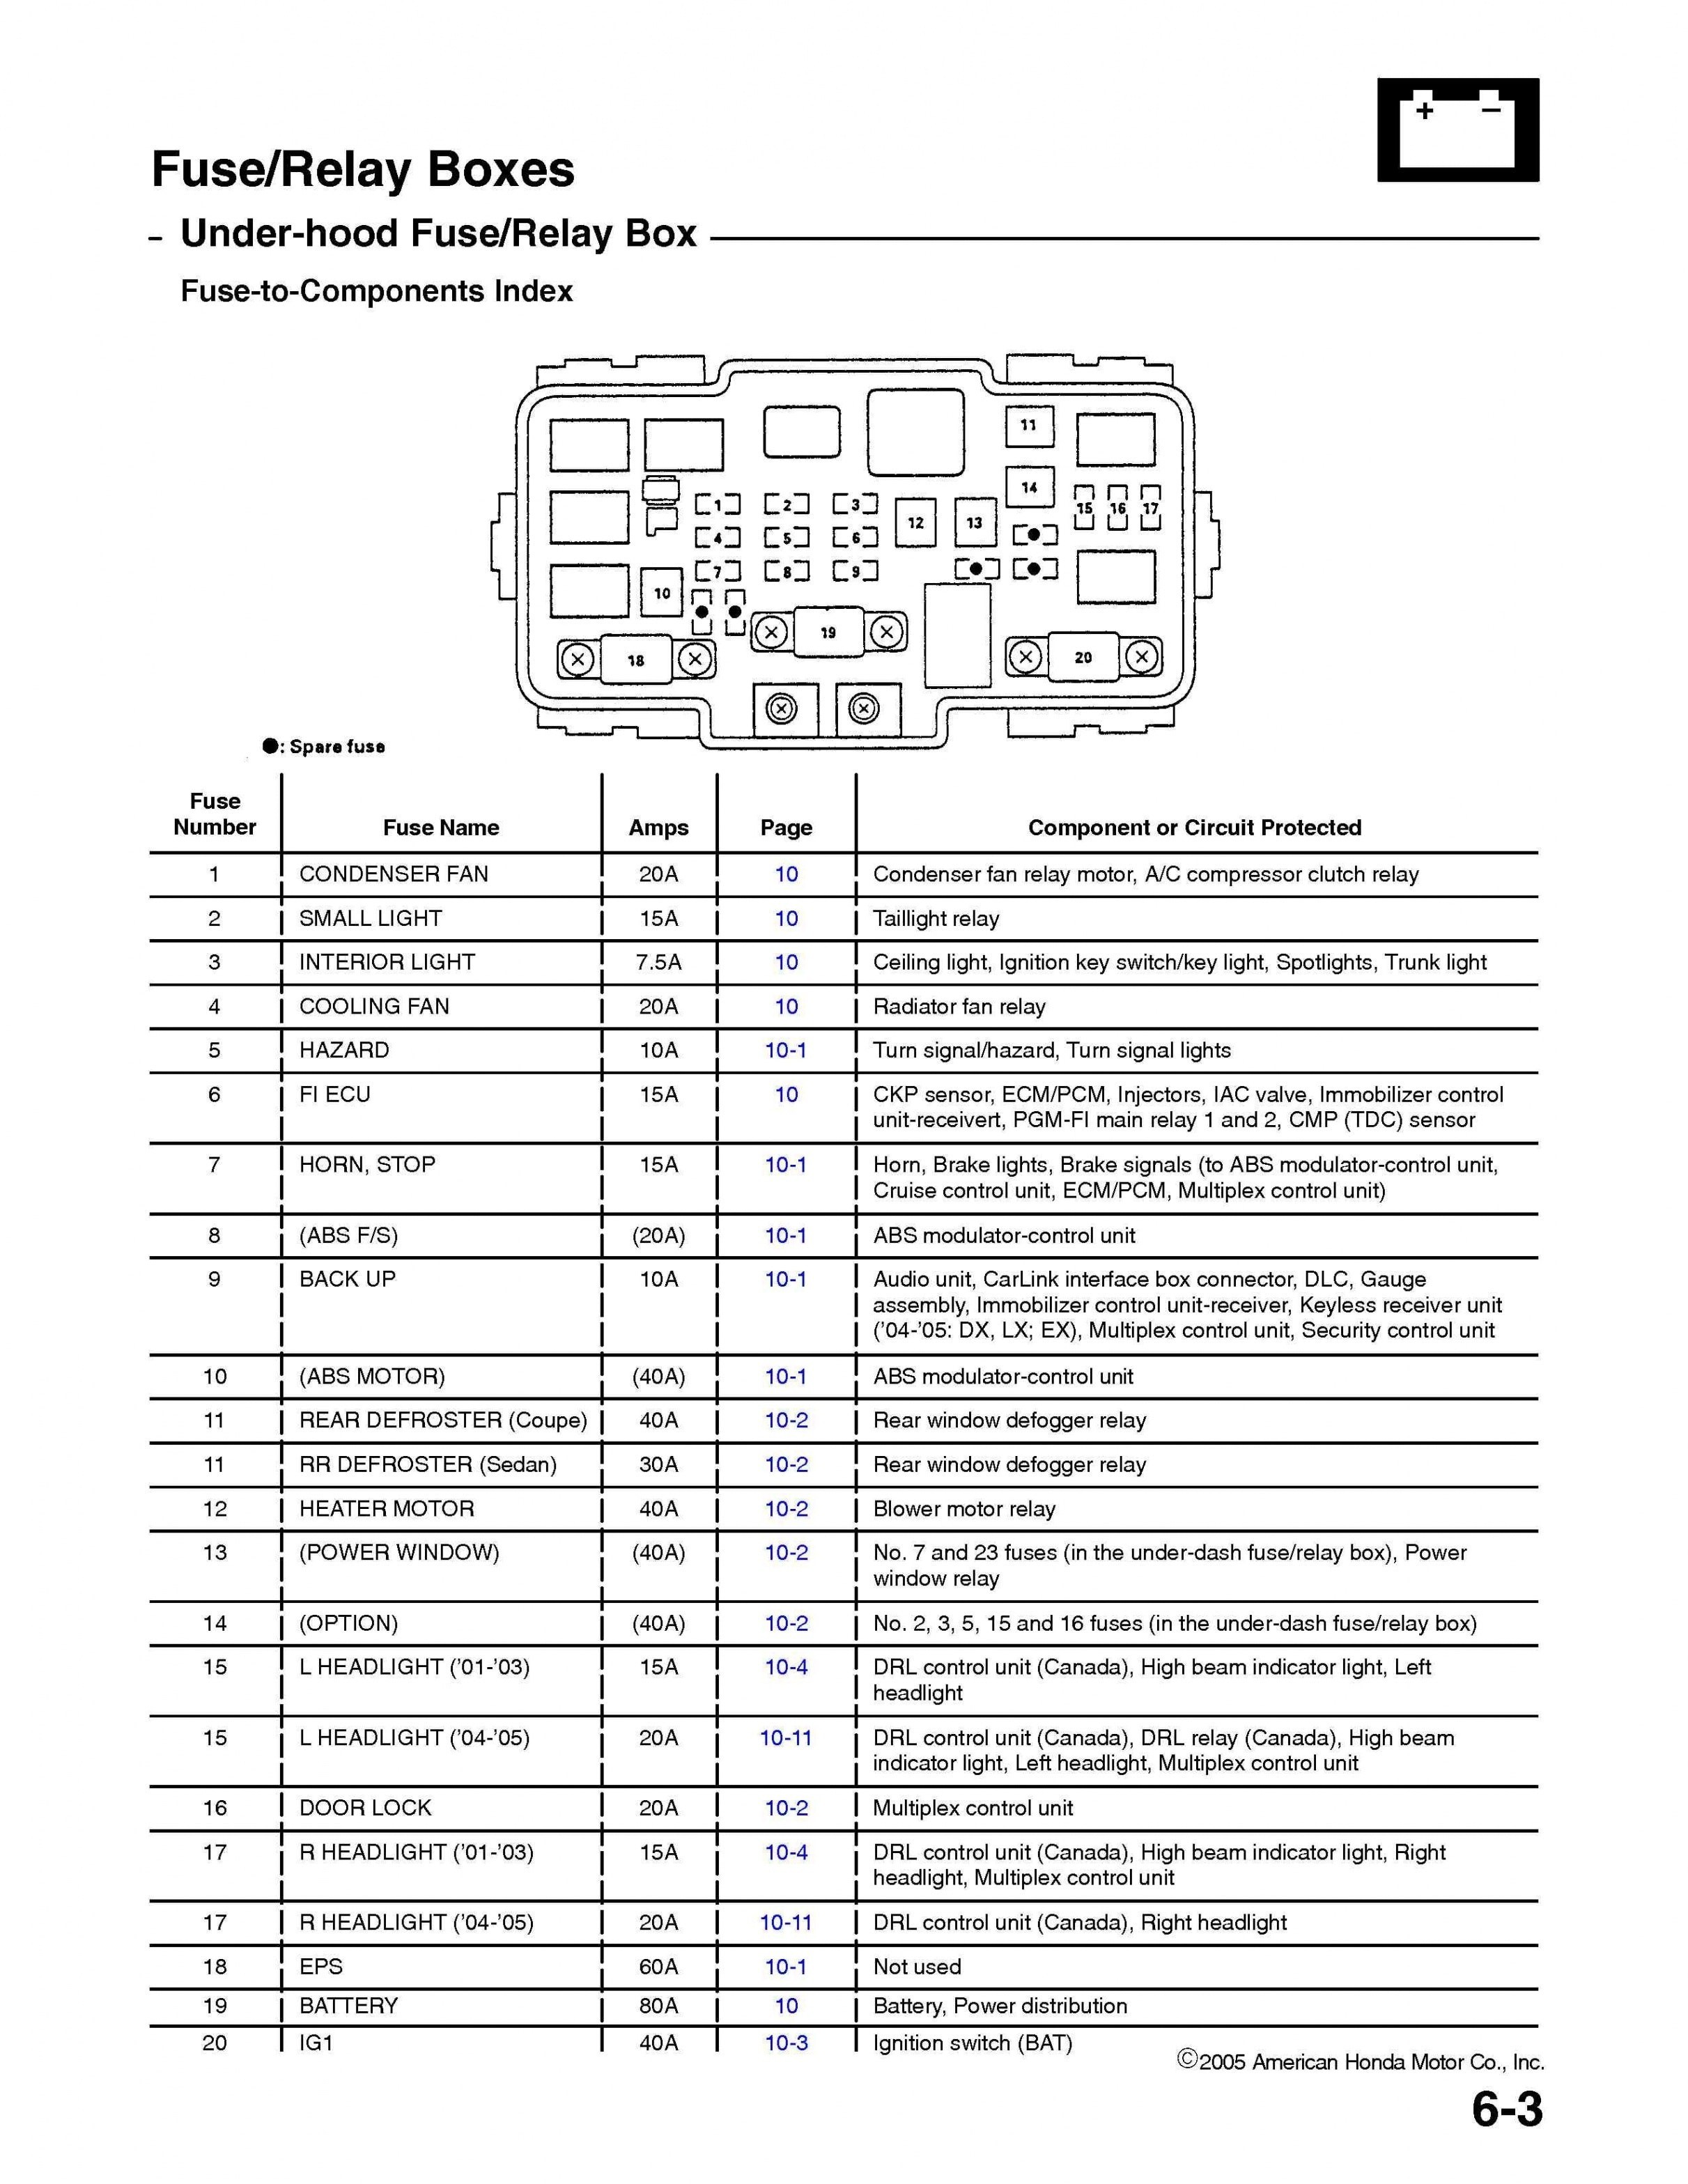 99 Honda Civic Engine Diagram Wiring Diagram Ac Samsung Best 2003 Honda Civic Engine Diagram